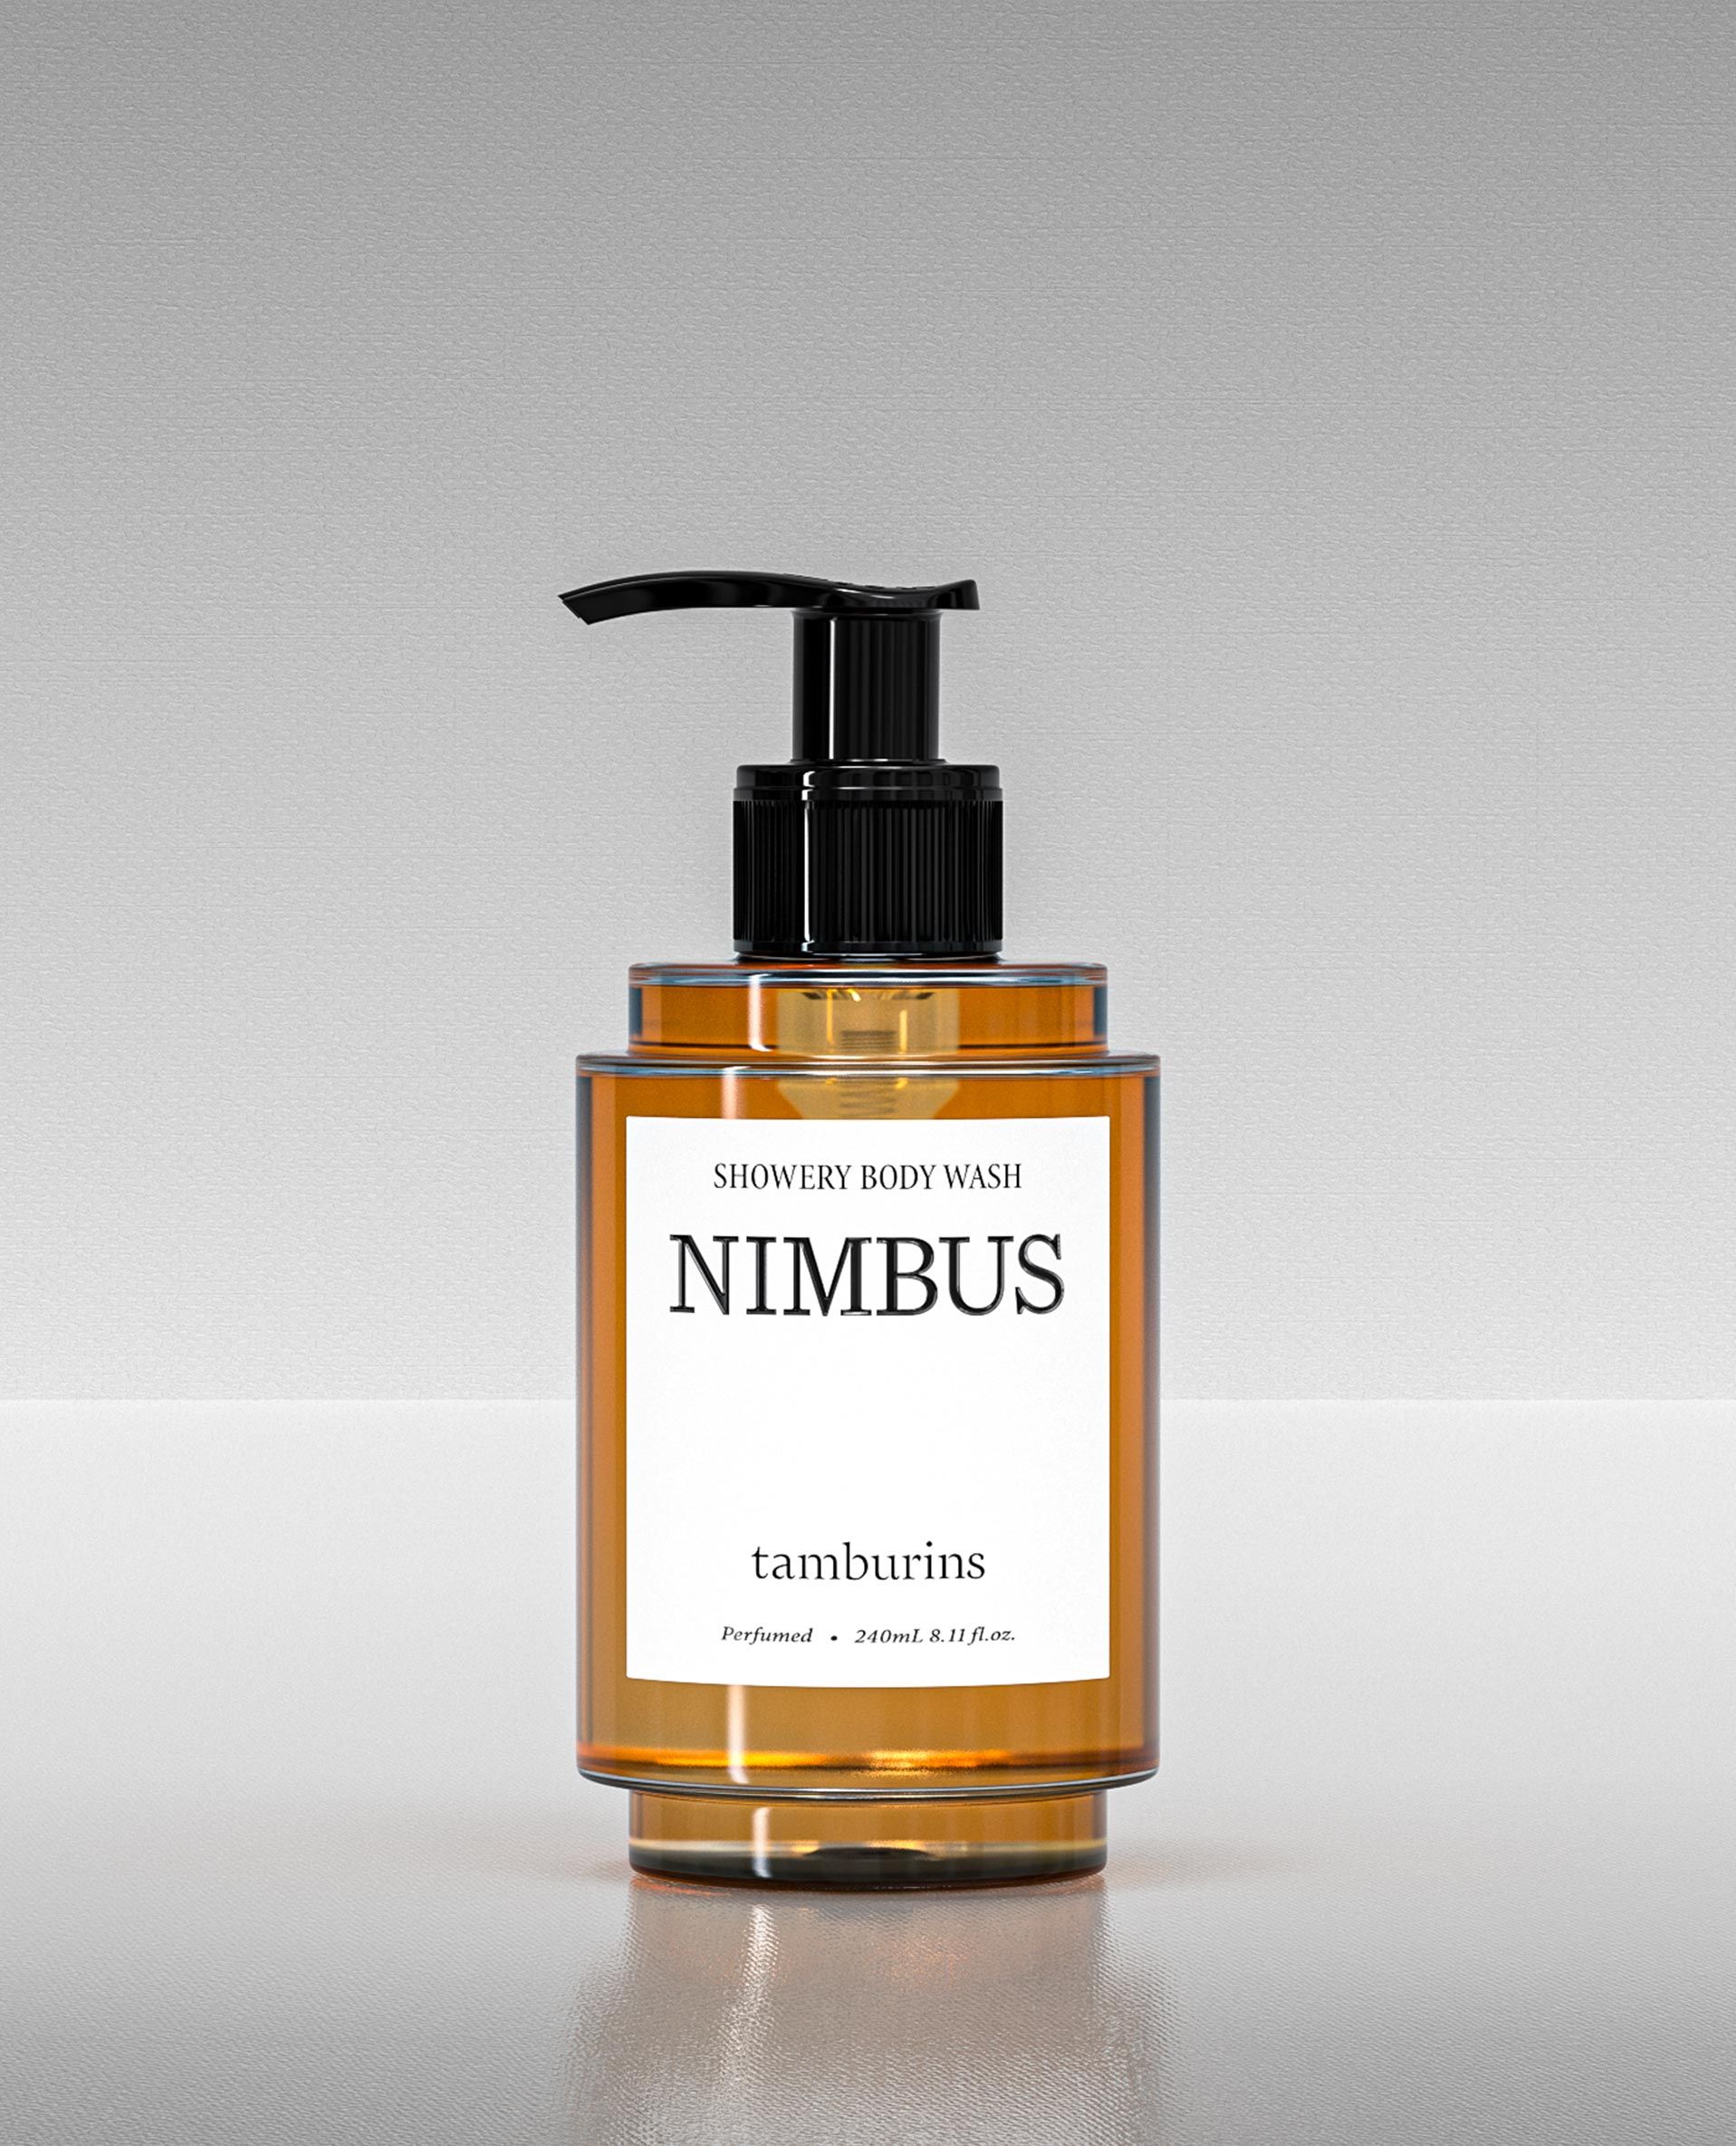 SHOWERY BODY WASH NIMBUS